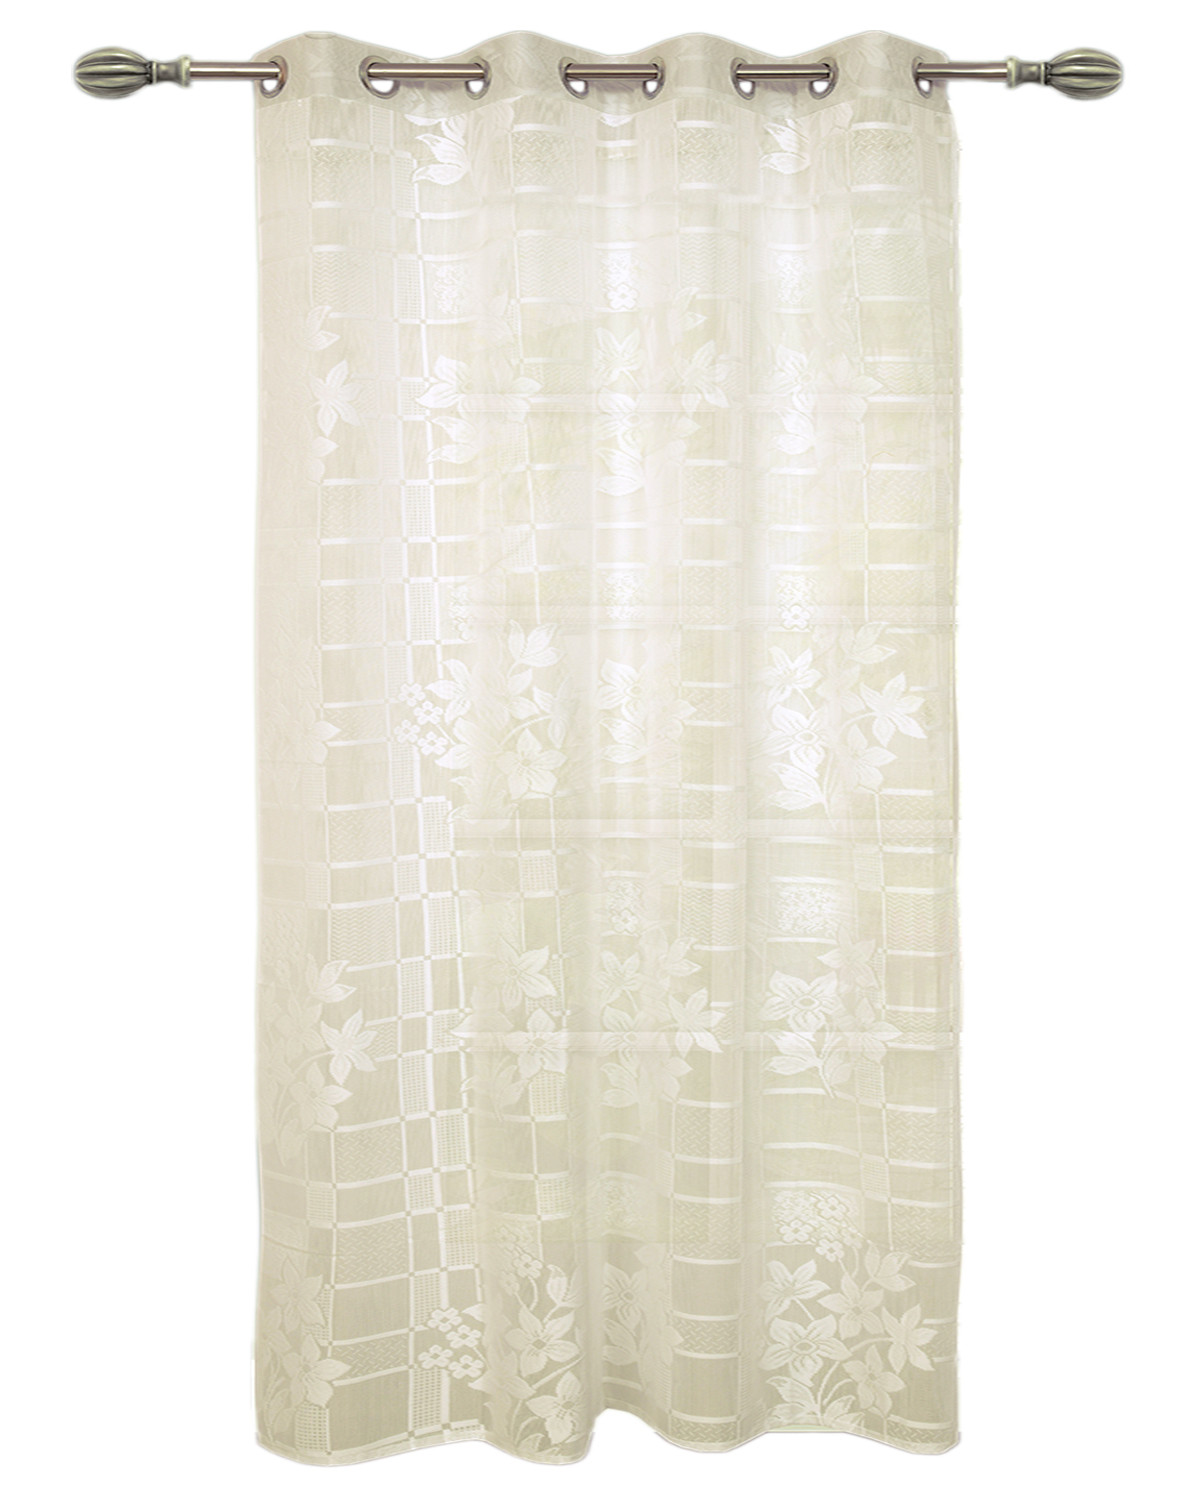 Kuber Industries Flower Print Home Decor Cotton Door Curtain With 8 Eyeletss, 7 Feet (Cream)